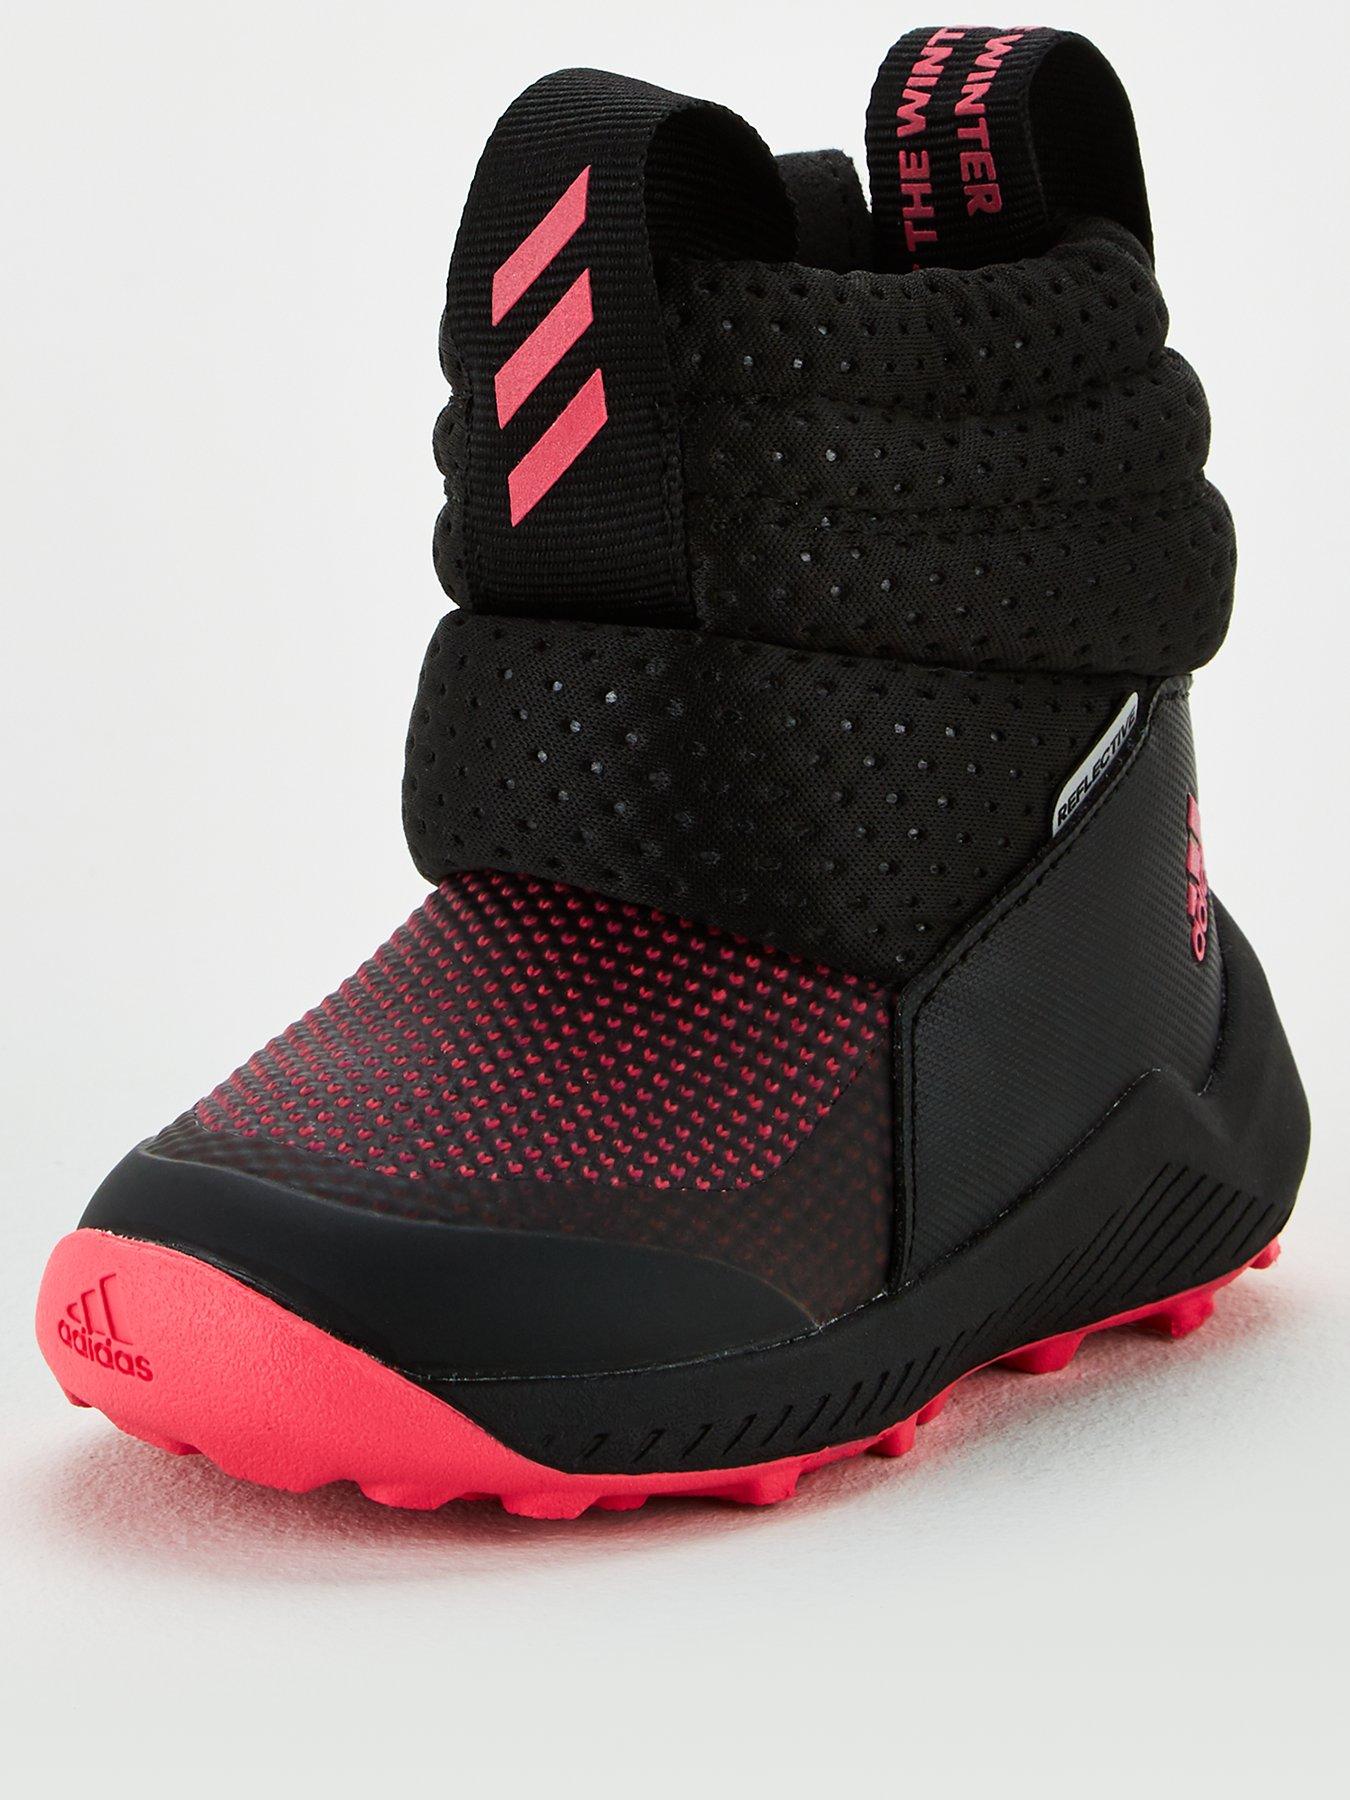 adidas boots snow